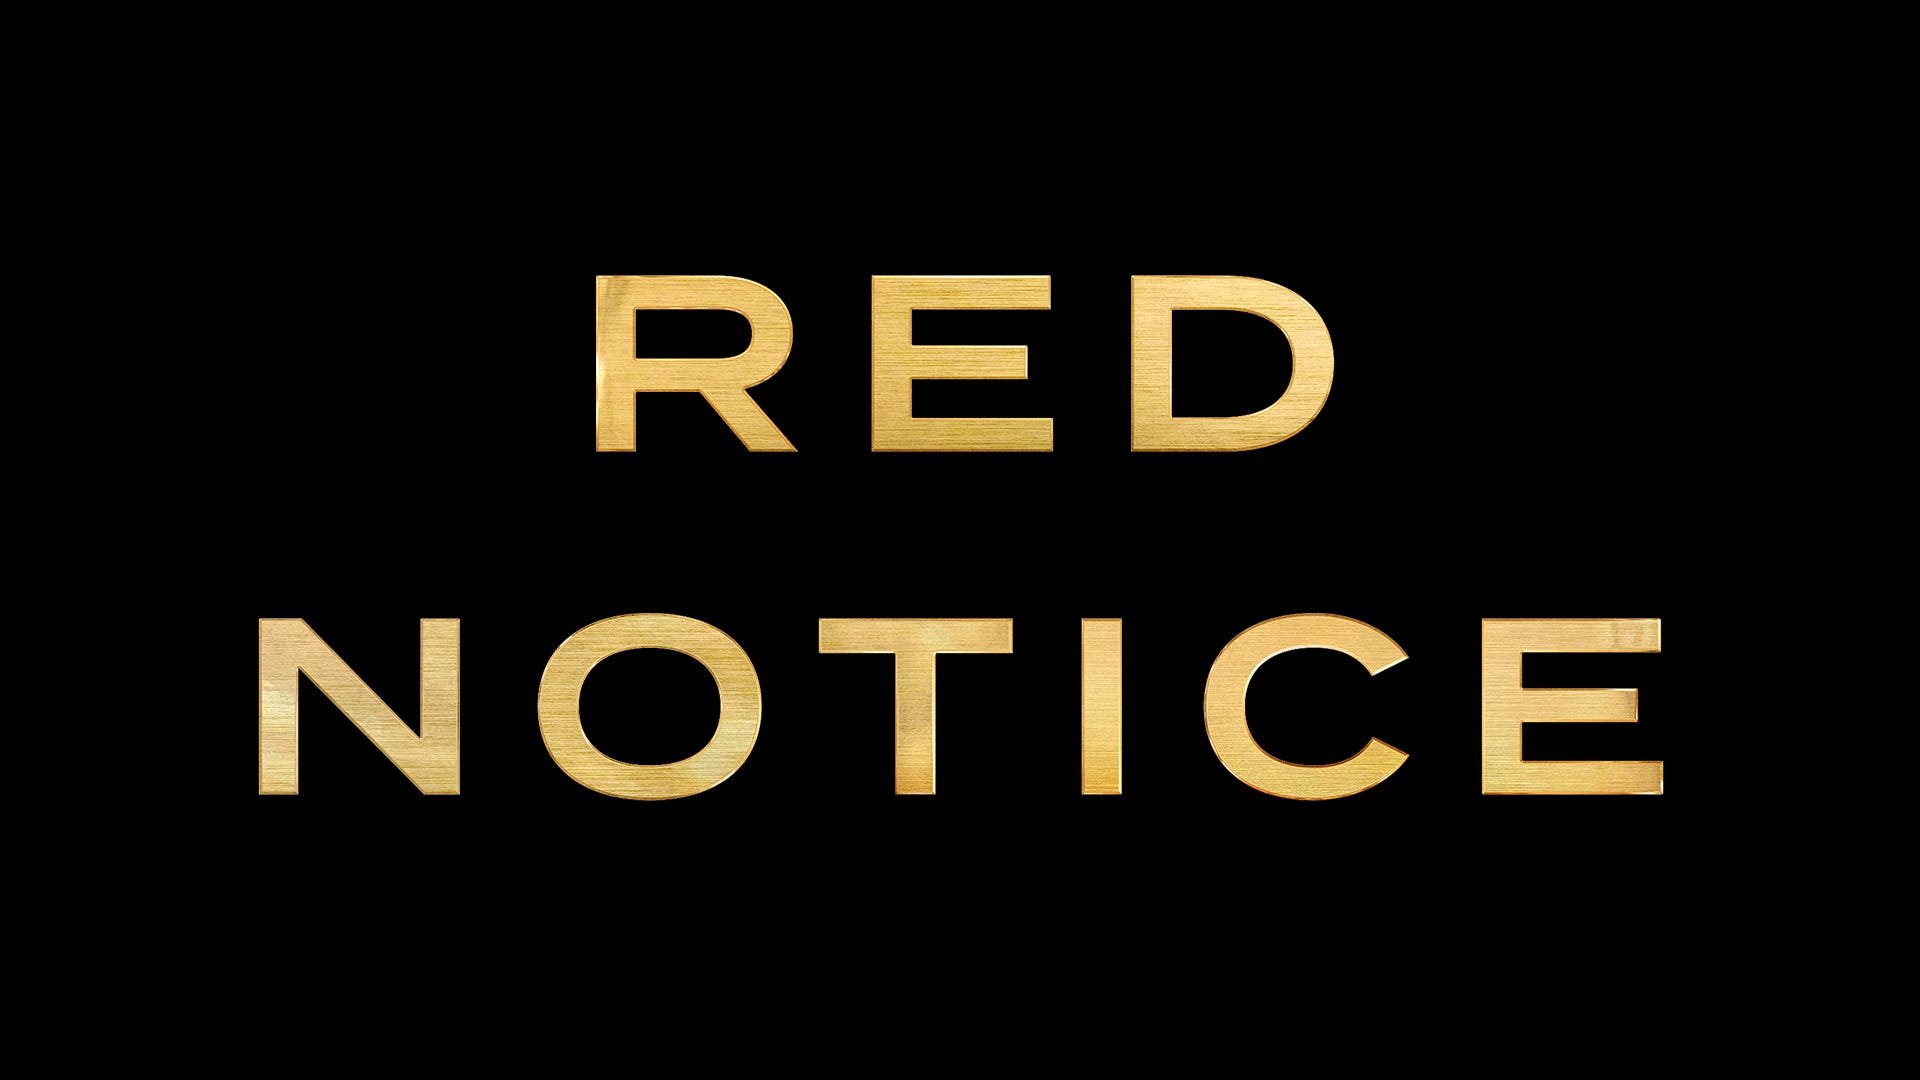 Netflix Sas Red Notice Movie Wallpapers